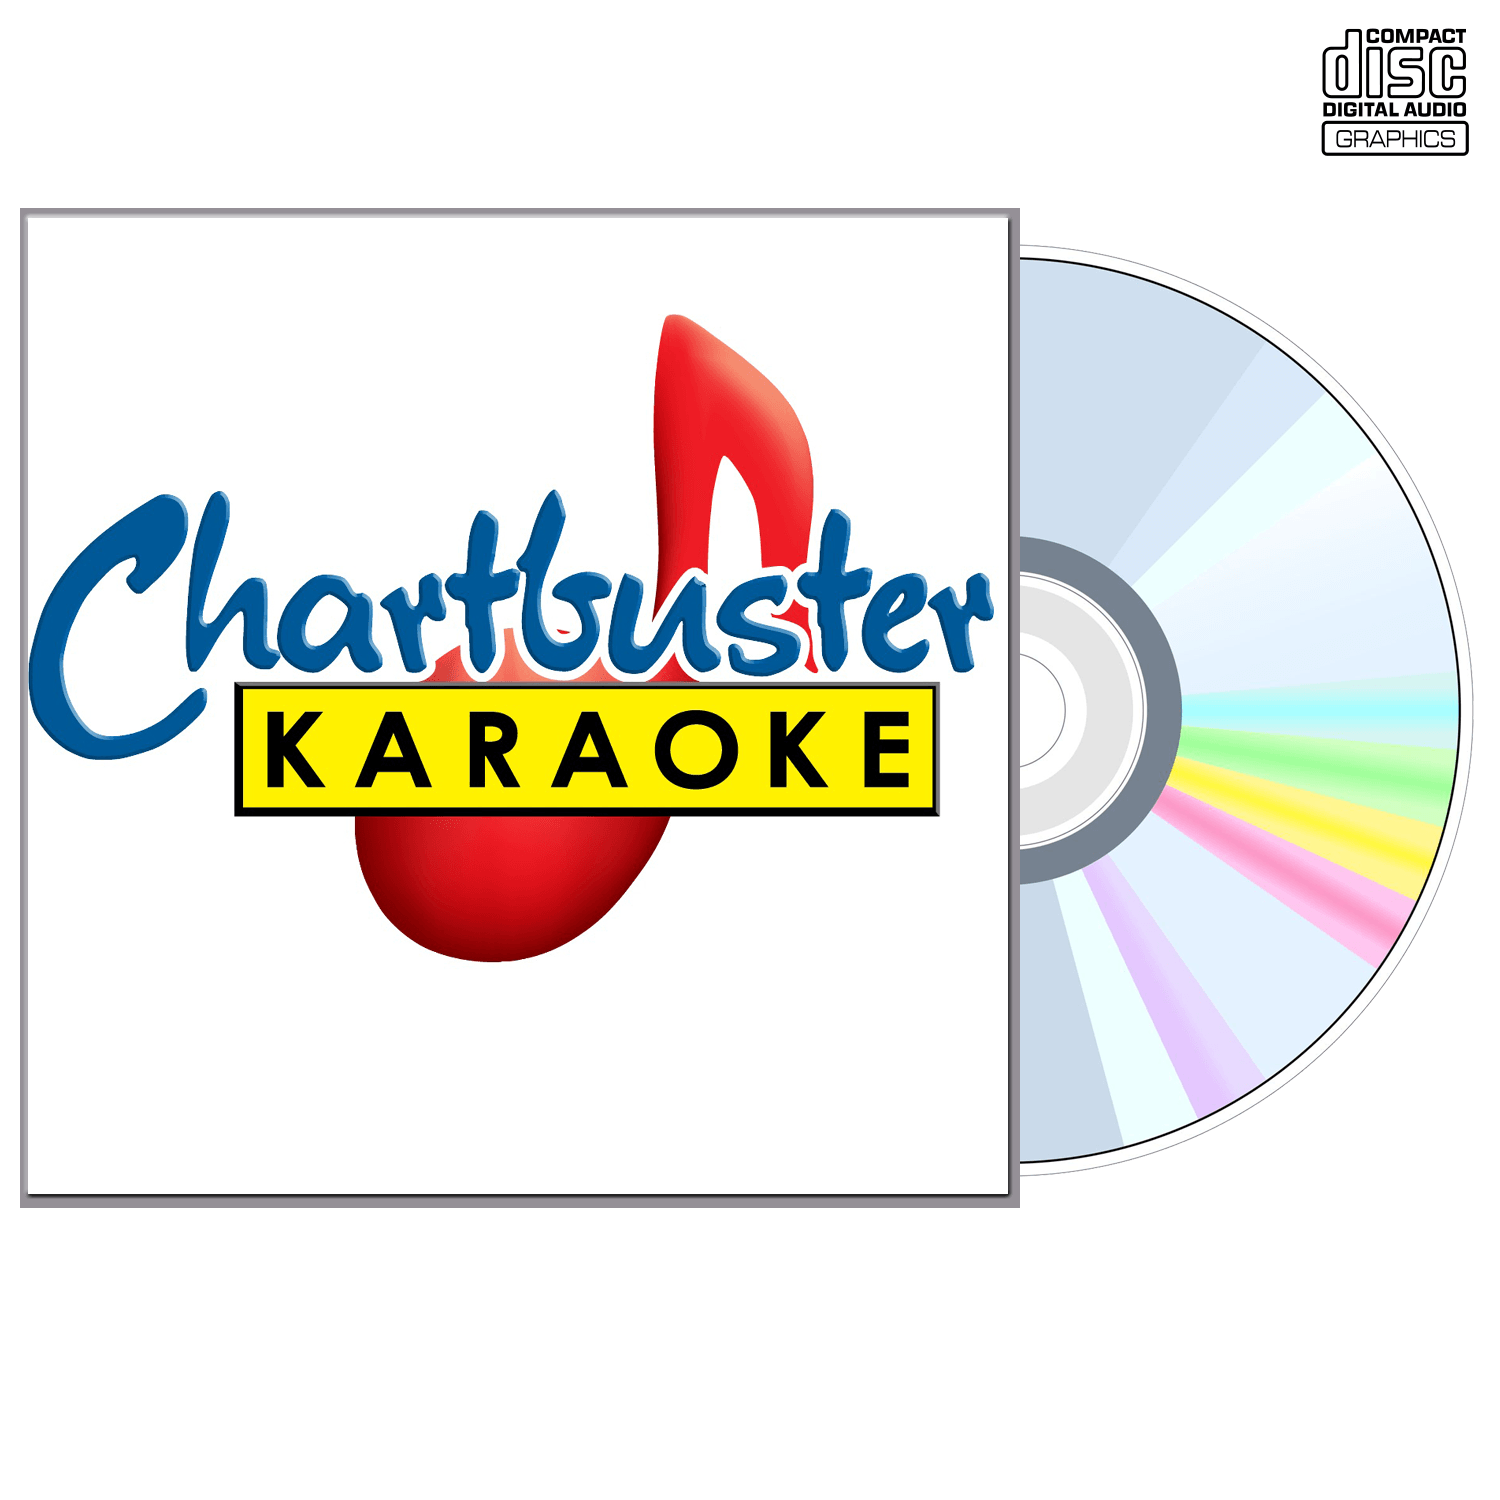 Jennifer Knapp - CD+G - Chartbuster Karaoke - Karaoke Home Entertainment